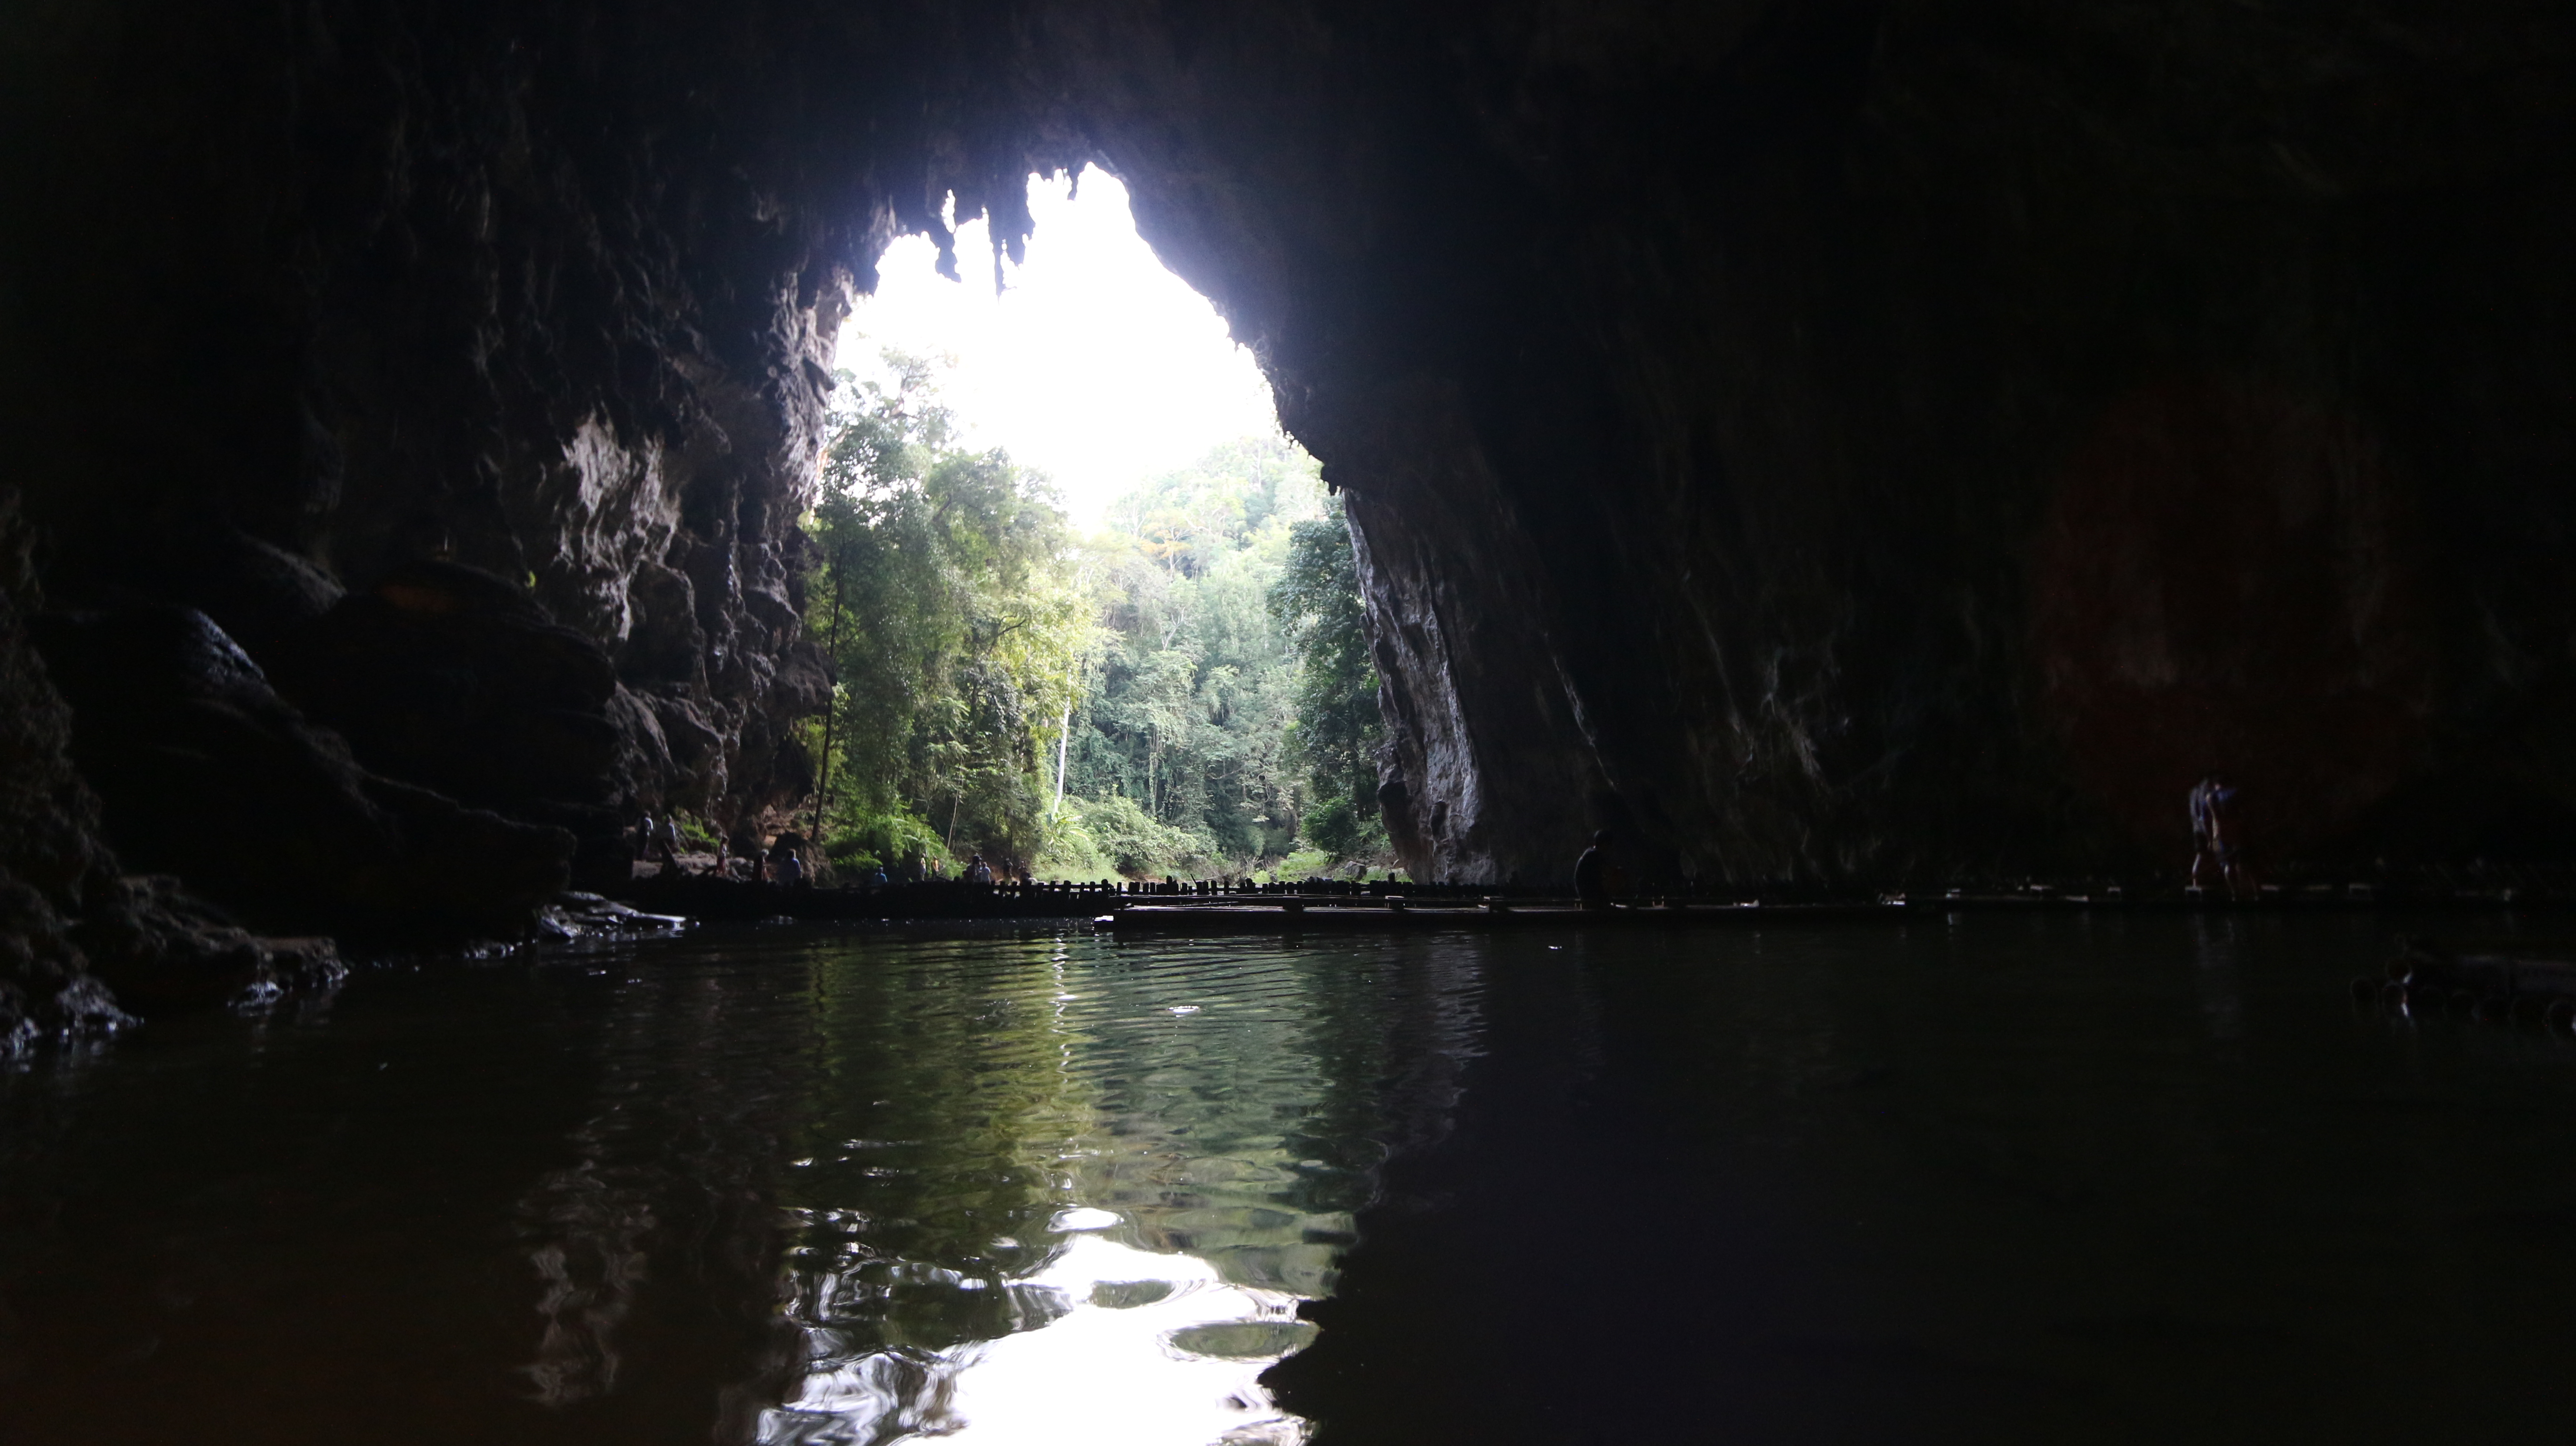 Tham Nam Lod cave